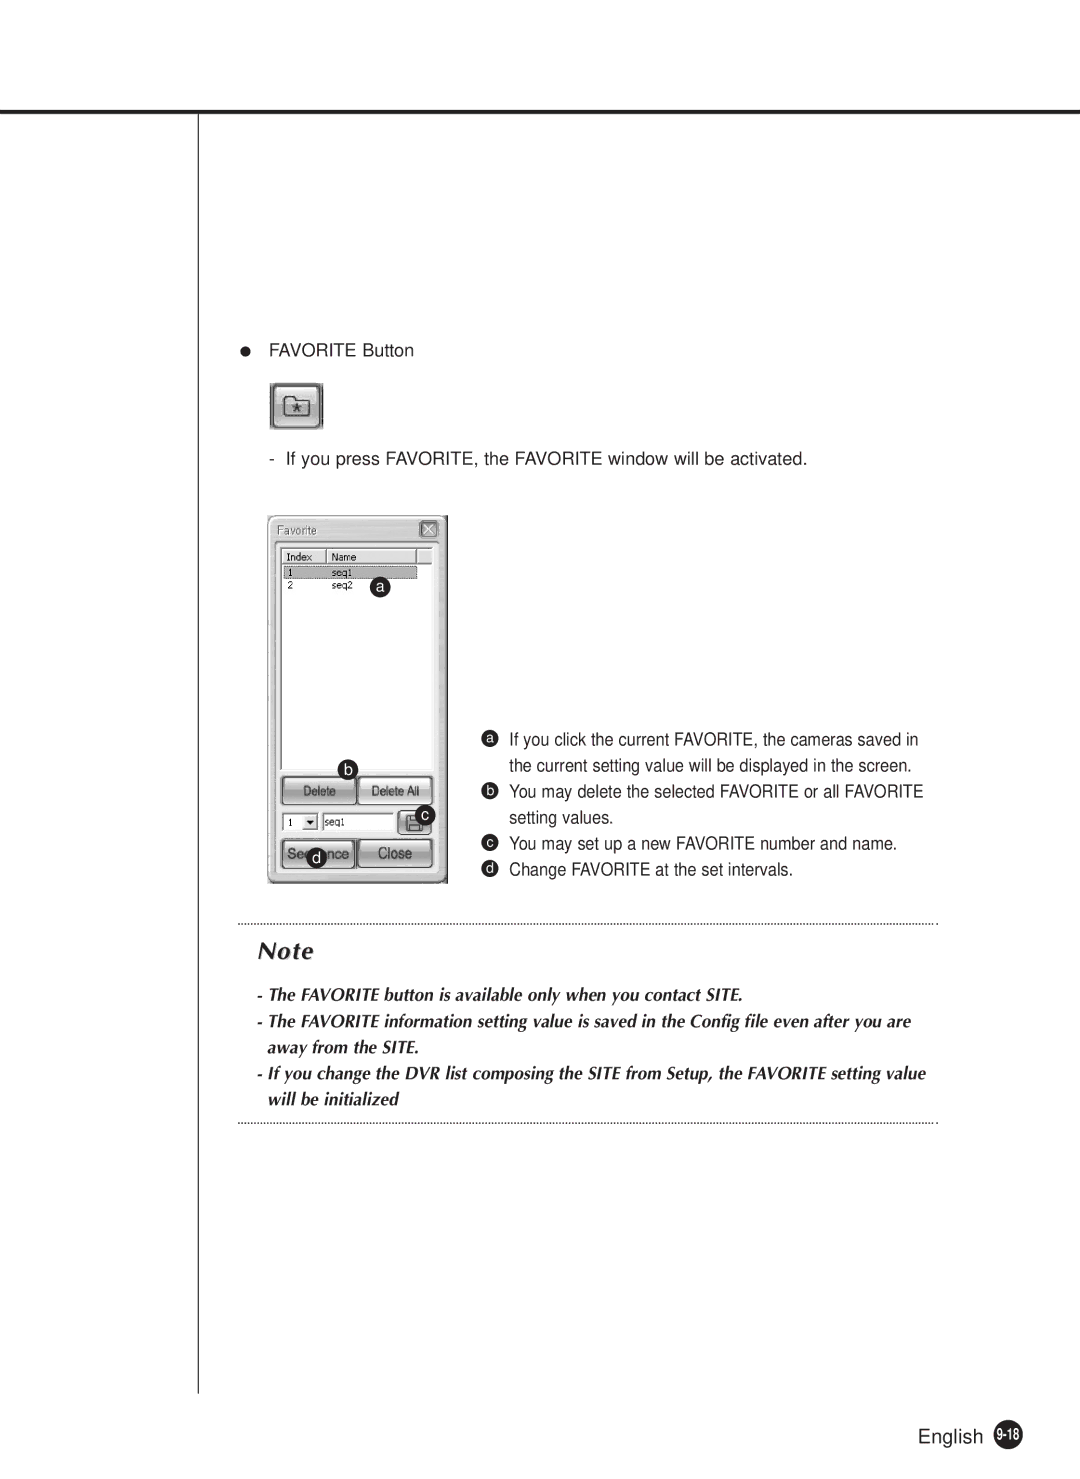 Samsung SHR-2040P, SHR-2040N manual Change Favorite at the set intervals 